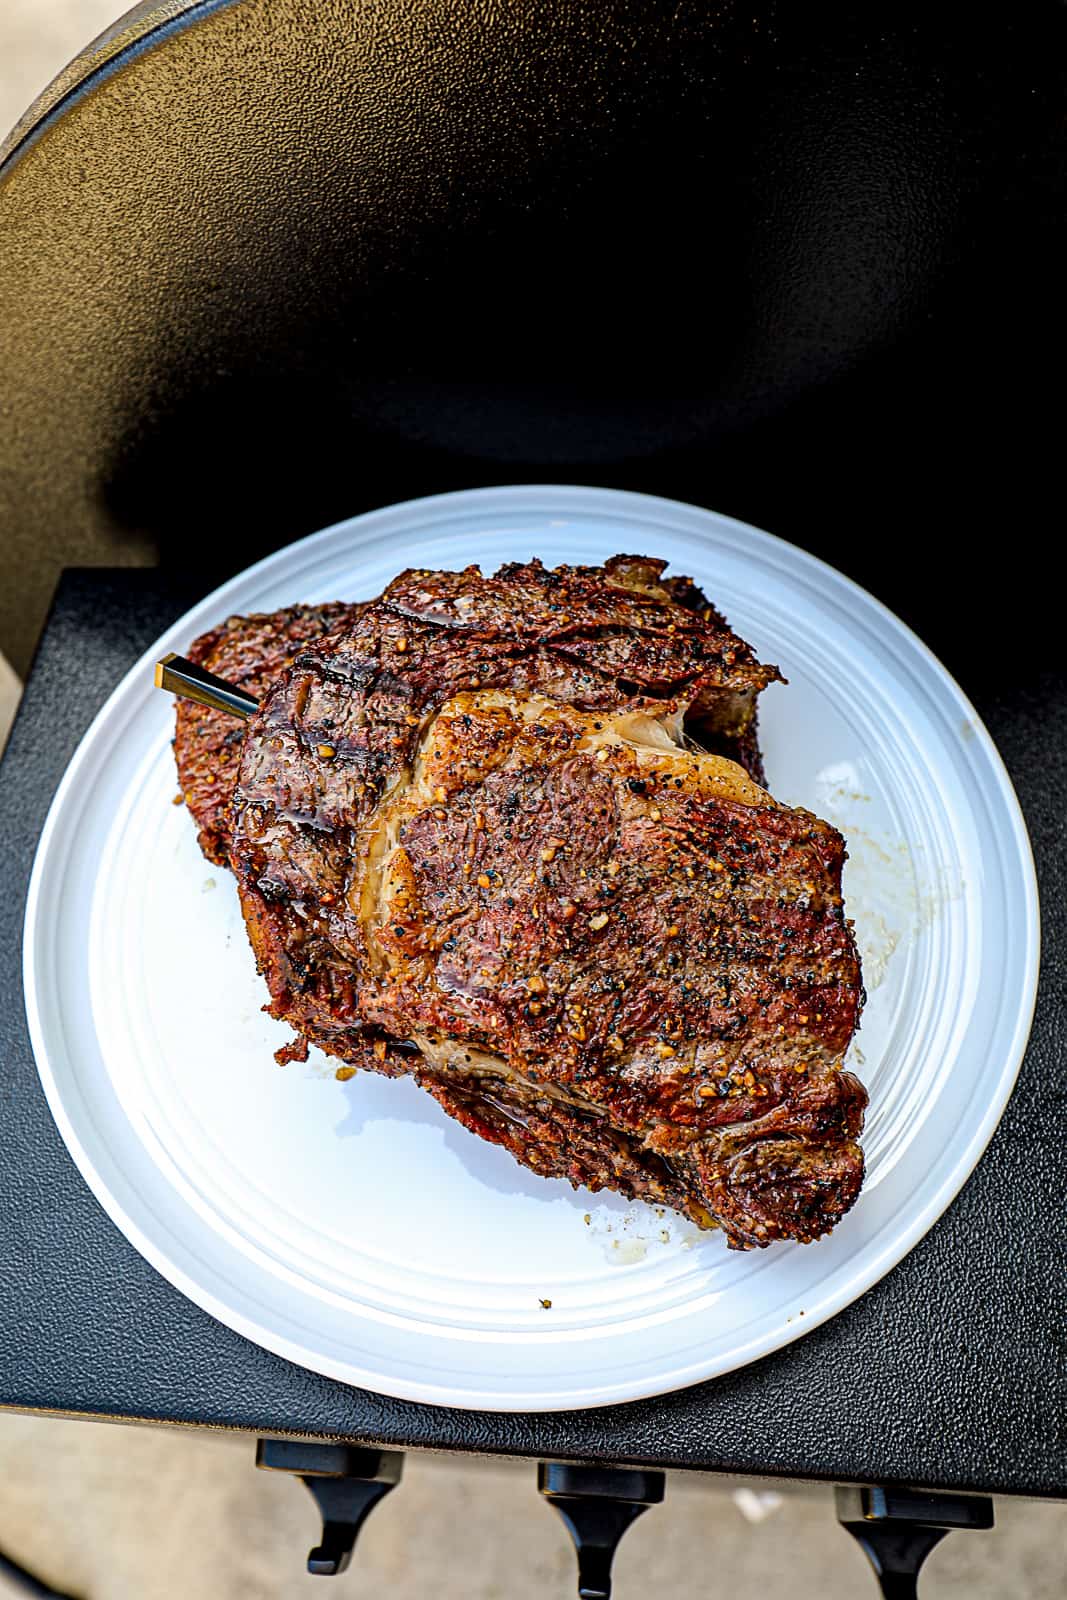 Medium Rare Traeger Smoked Ribeye Steak